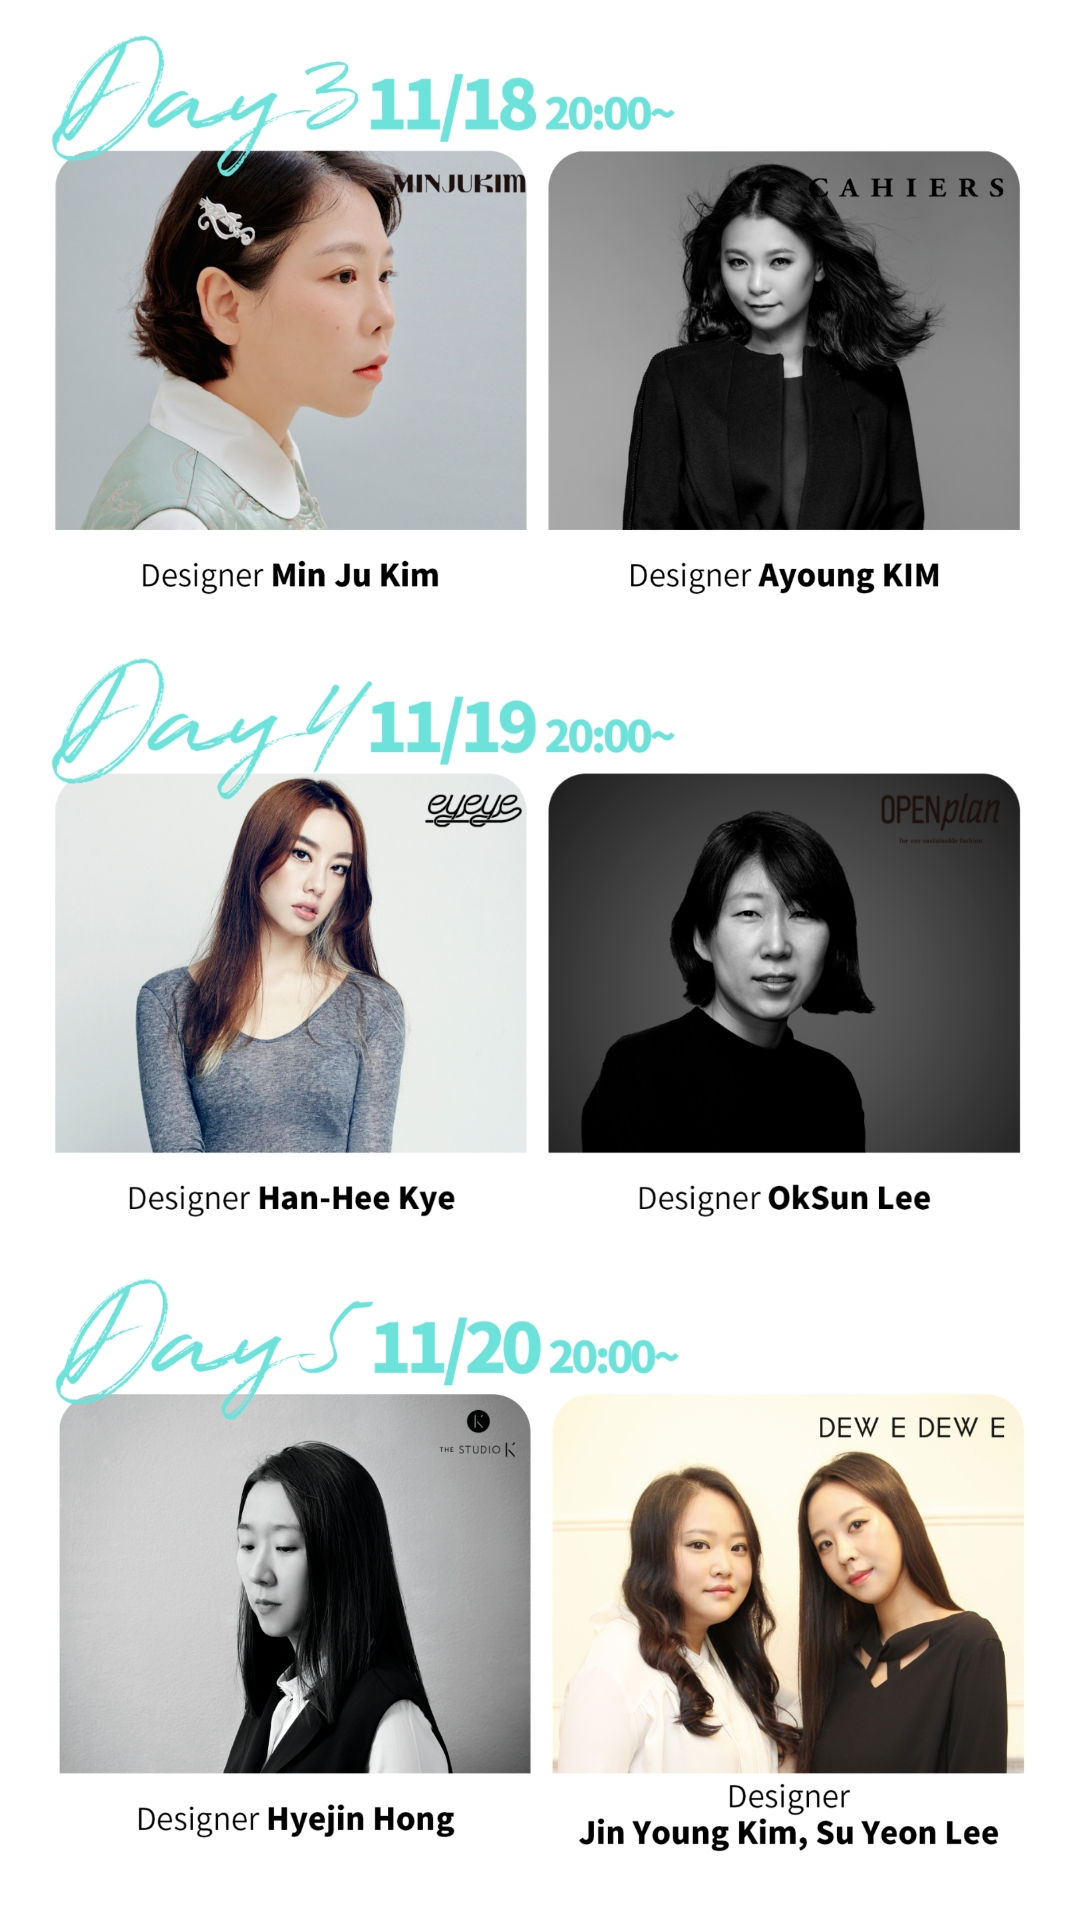 ON:Hallyu Festival - ON:TACT Fashion Show, Min Ju Kim, Ayoung KIM, Han-Hee Kye, OkSun Lee, Hyejin Hong, Jin Young Kim, Su Yeon Lee